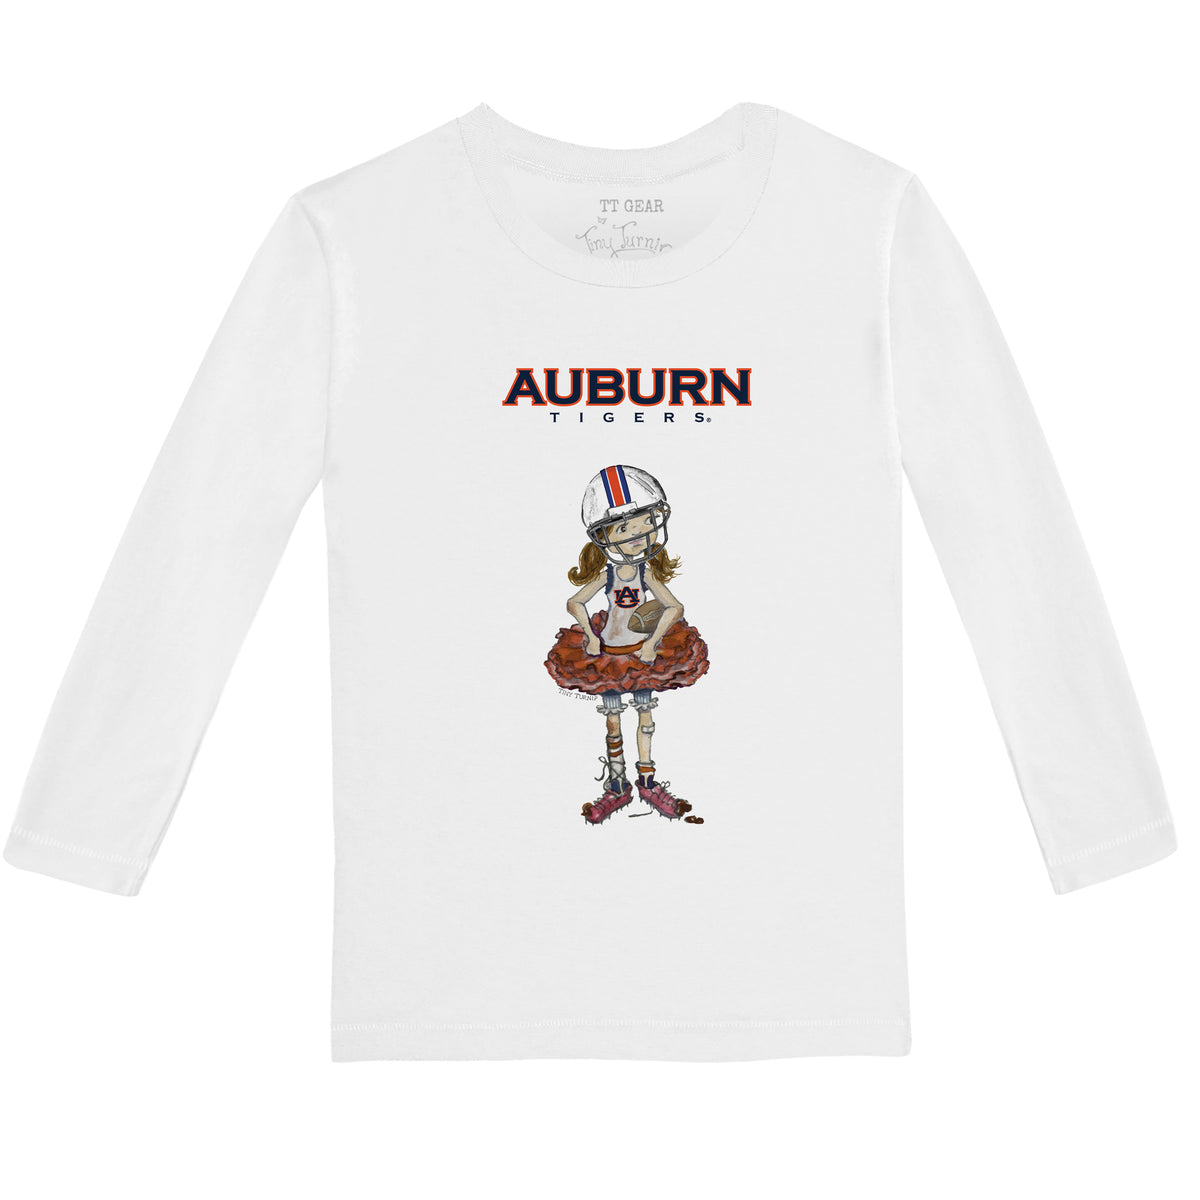 Auburn Tigers Babes Long-Sleeve Tee Shirt